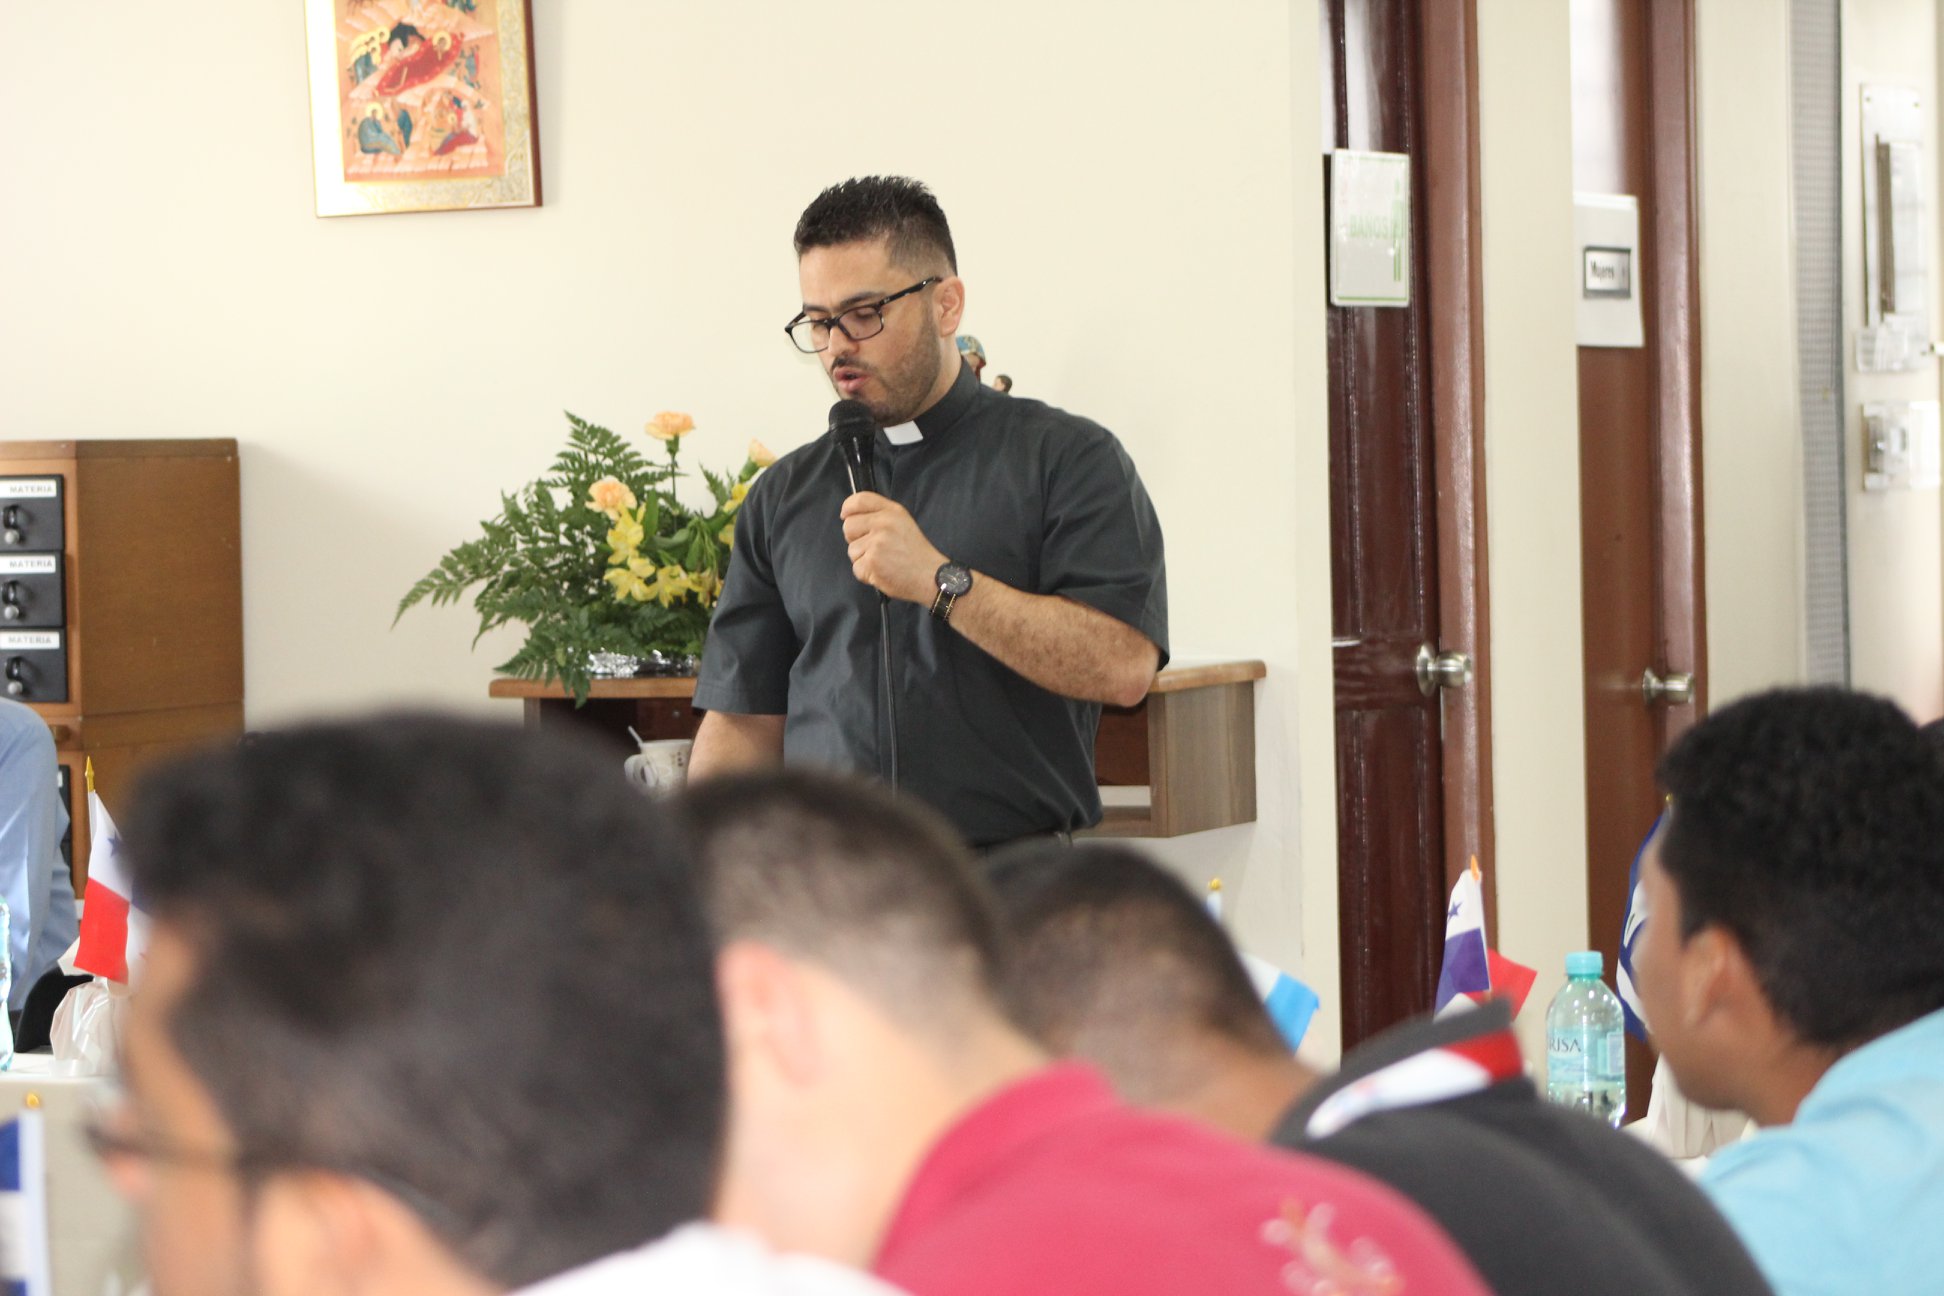 Futuros sacerdotes deben asumir evangelización en las redes sociales - OSCAM 2019